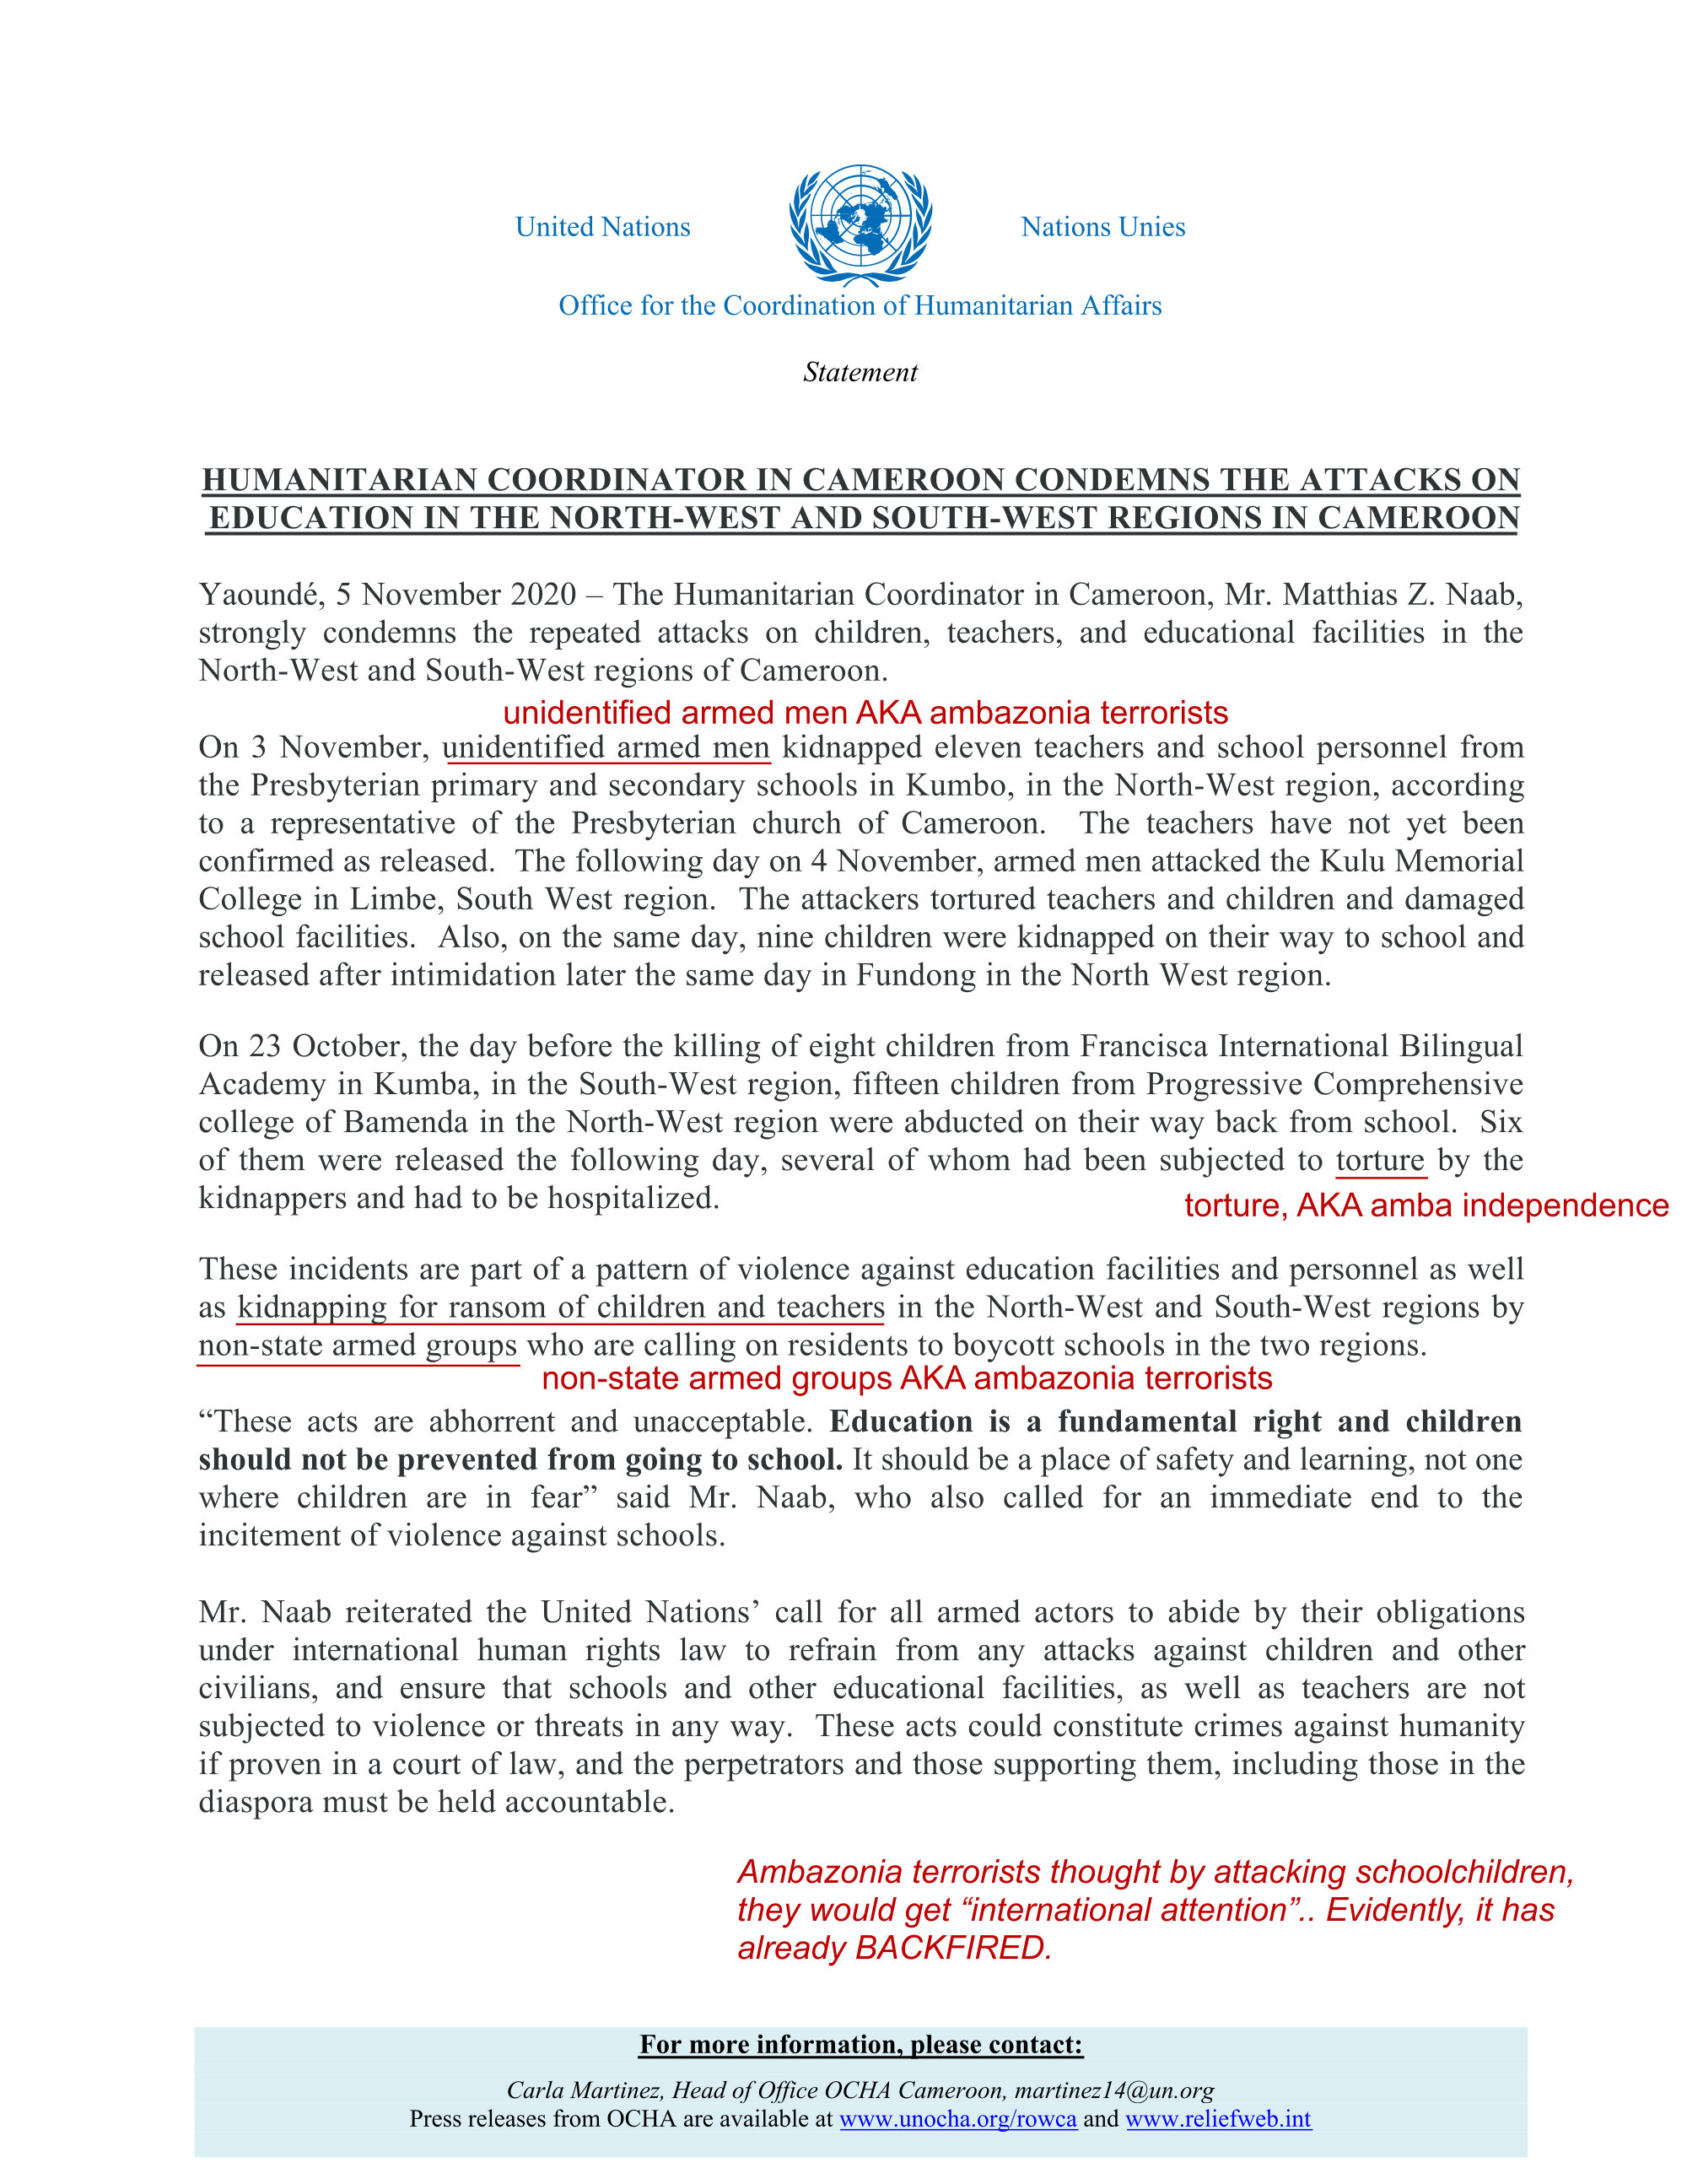 Amba Terrorists attack on schoolchildren- Statement from UN Humanitarian Coordination in Cameroon